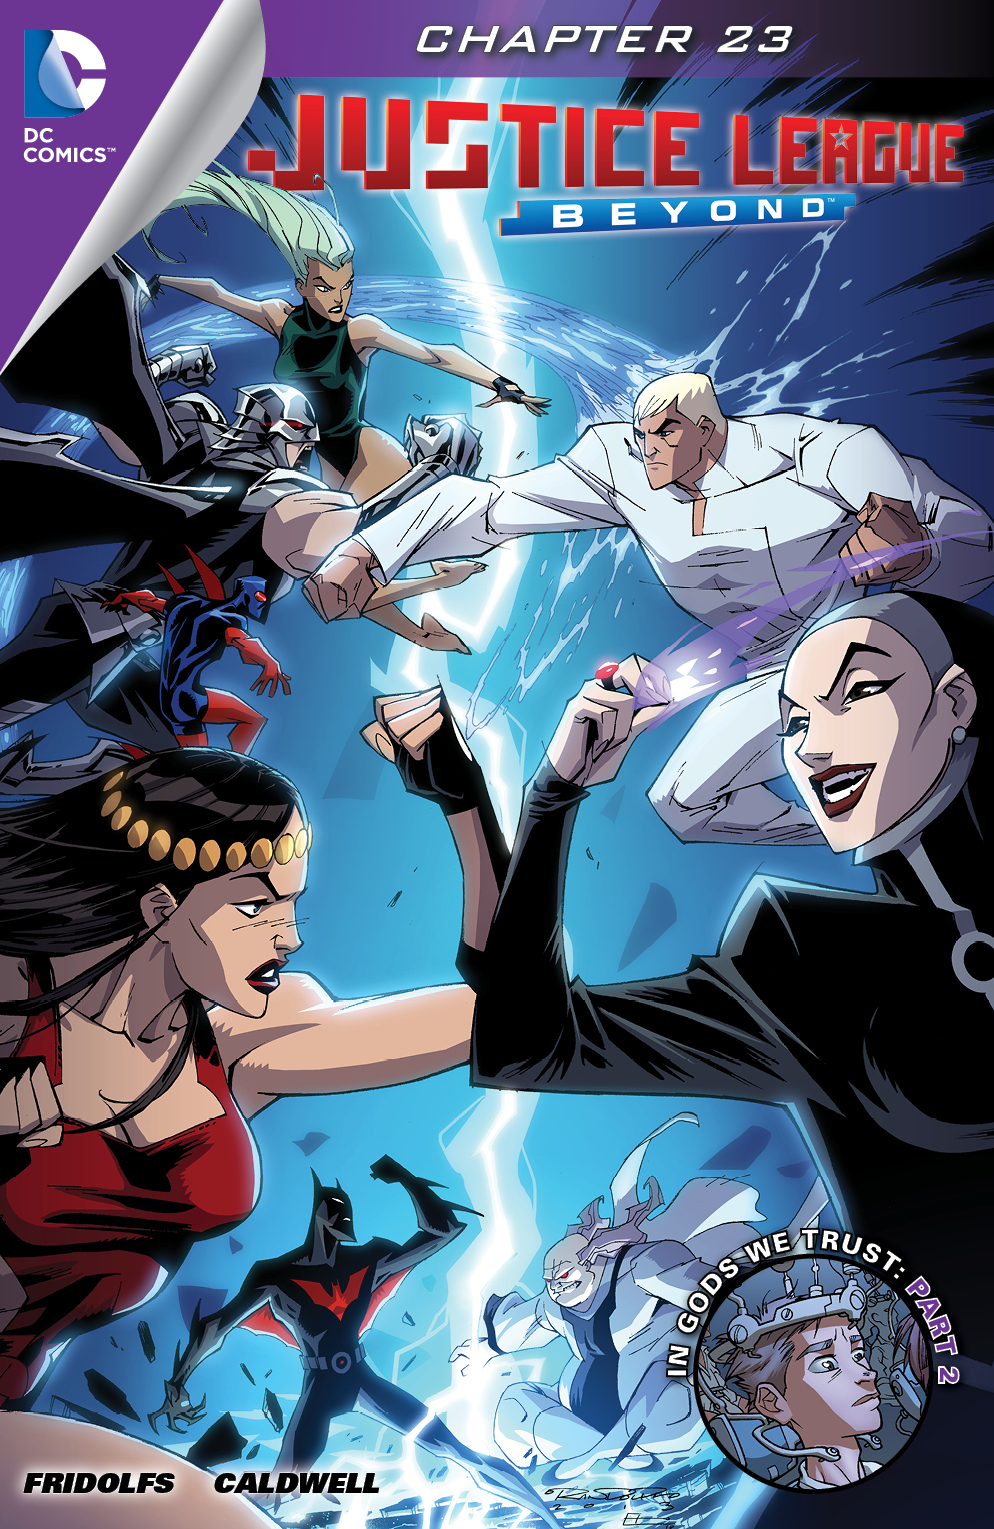 Justice League Beyond #23 preview images